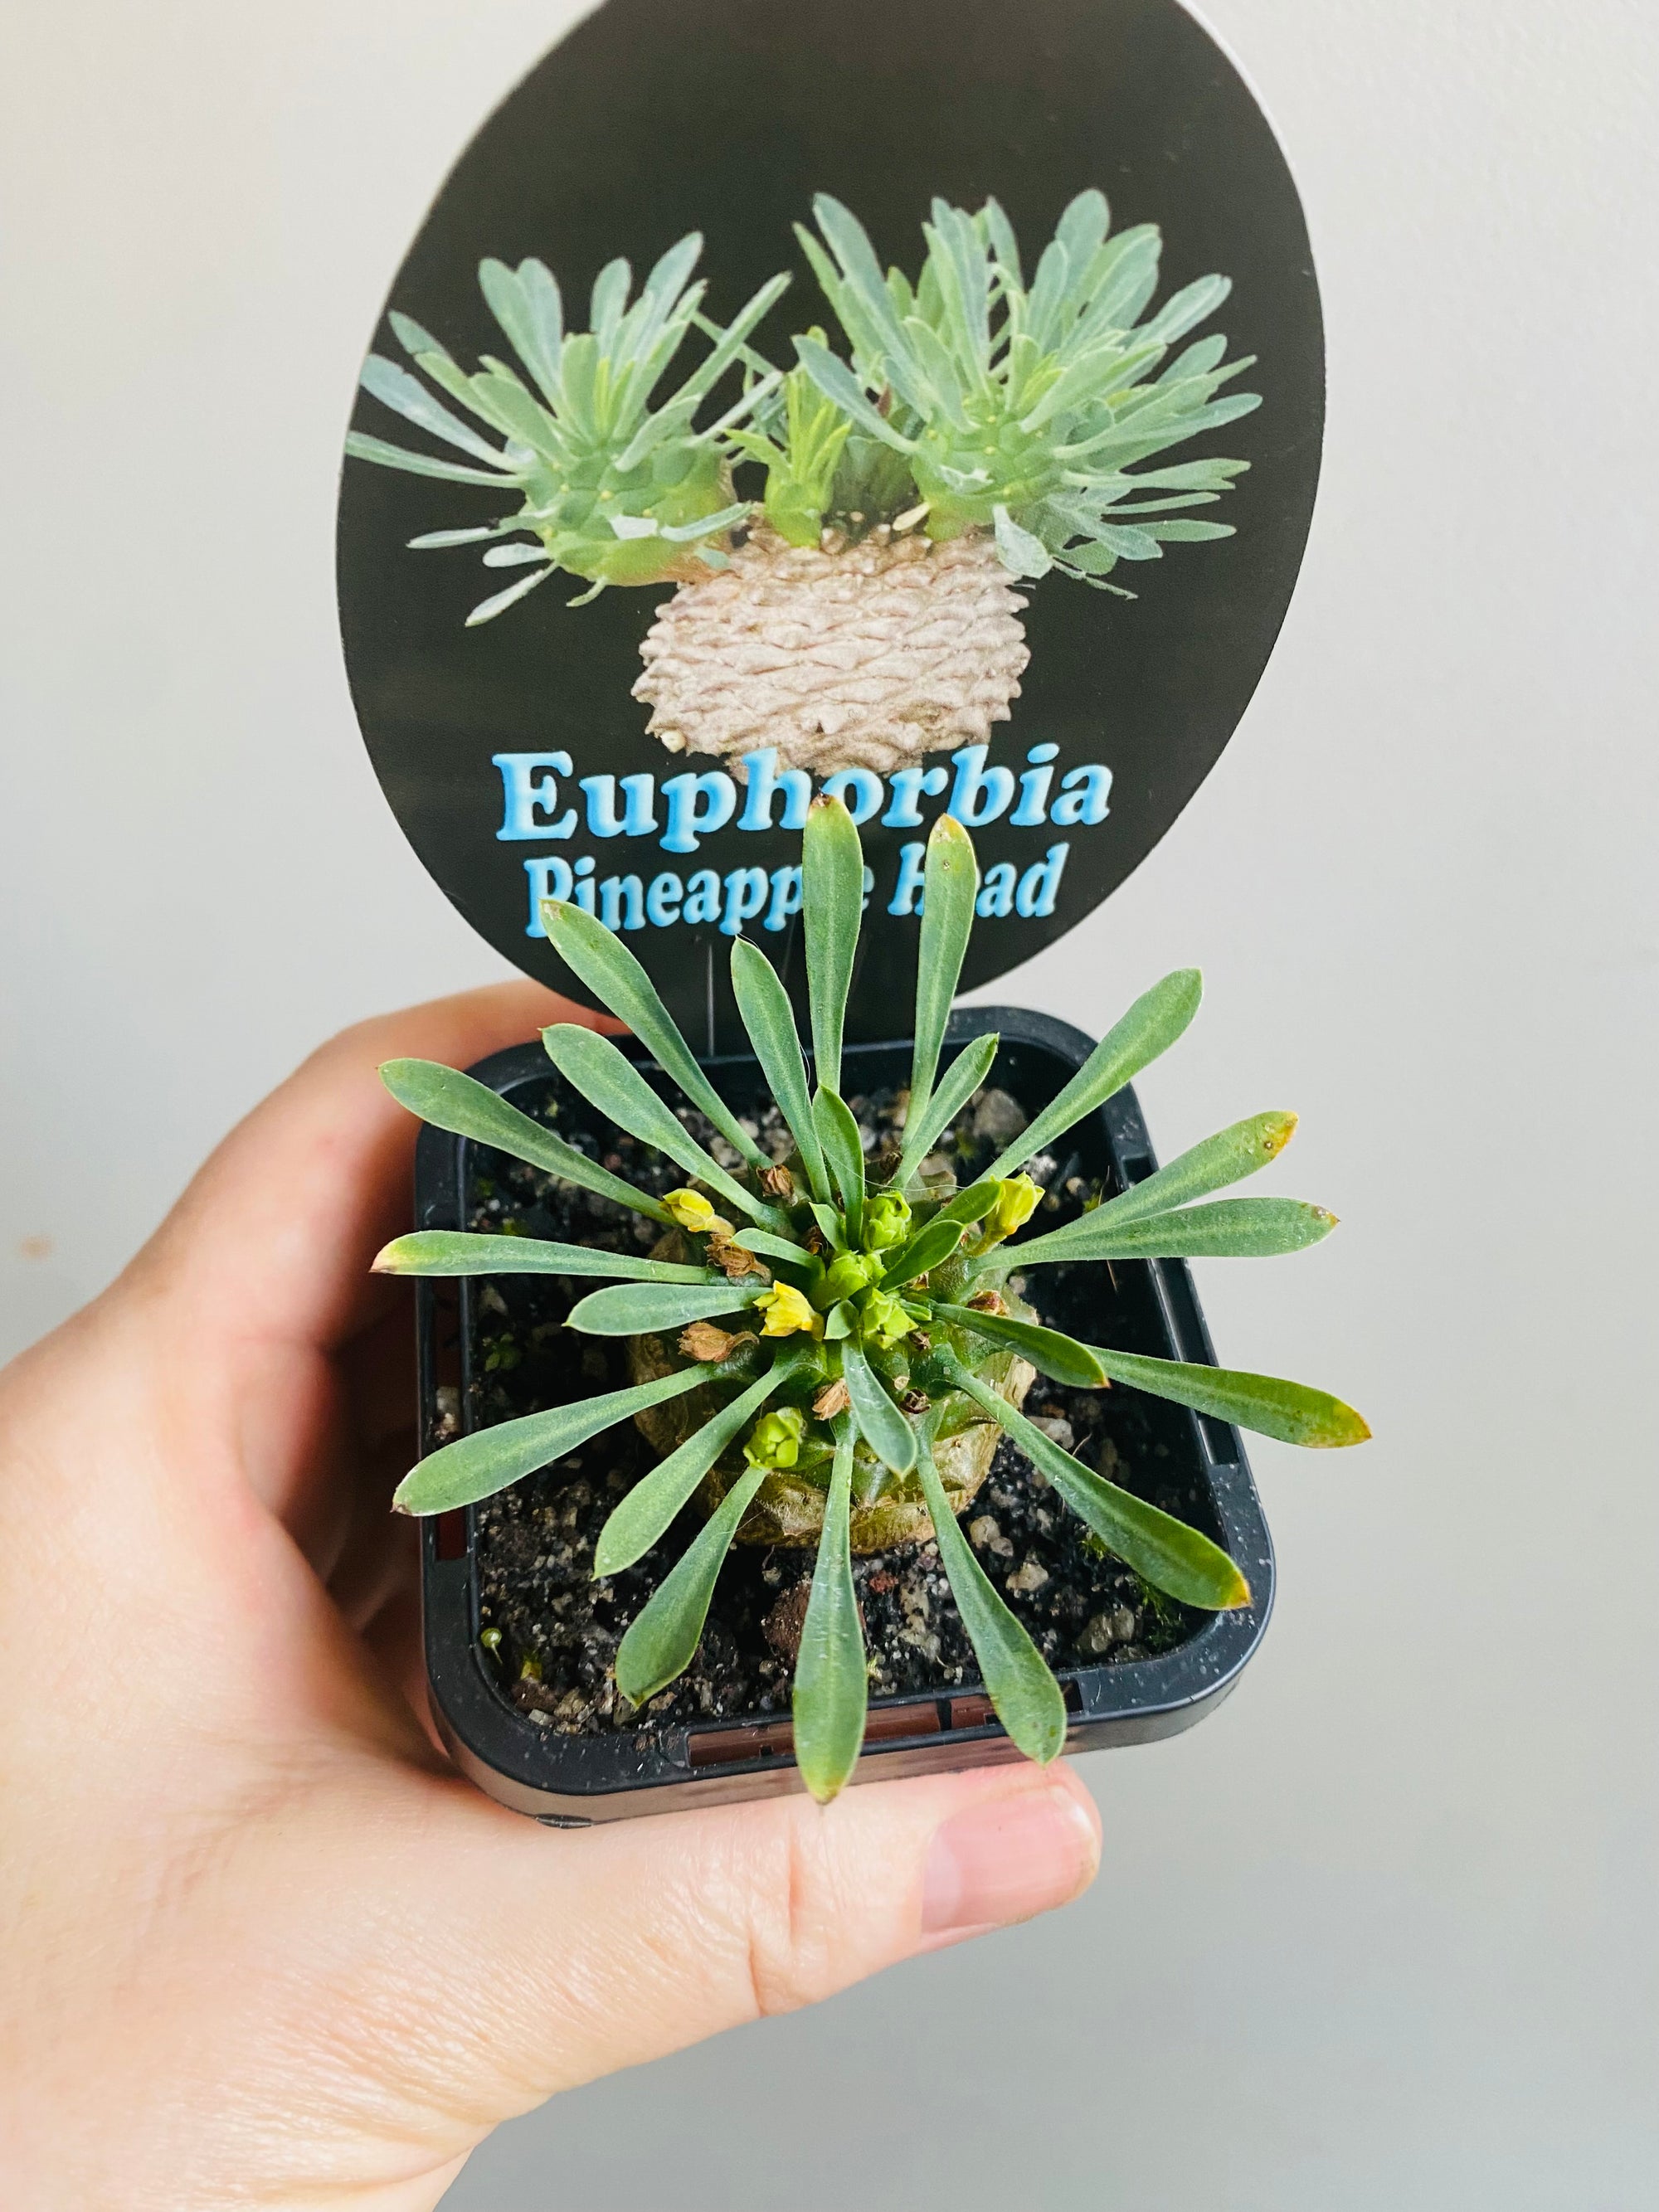 Euphorbia 'Pineapple Head'